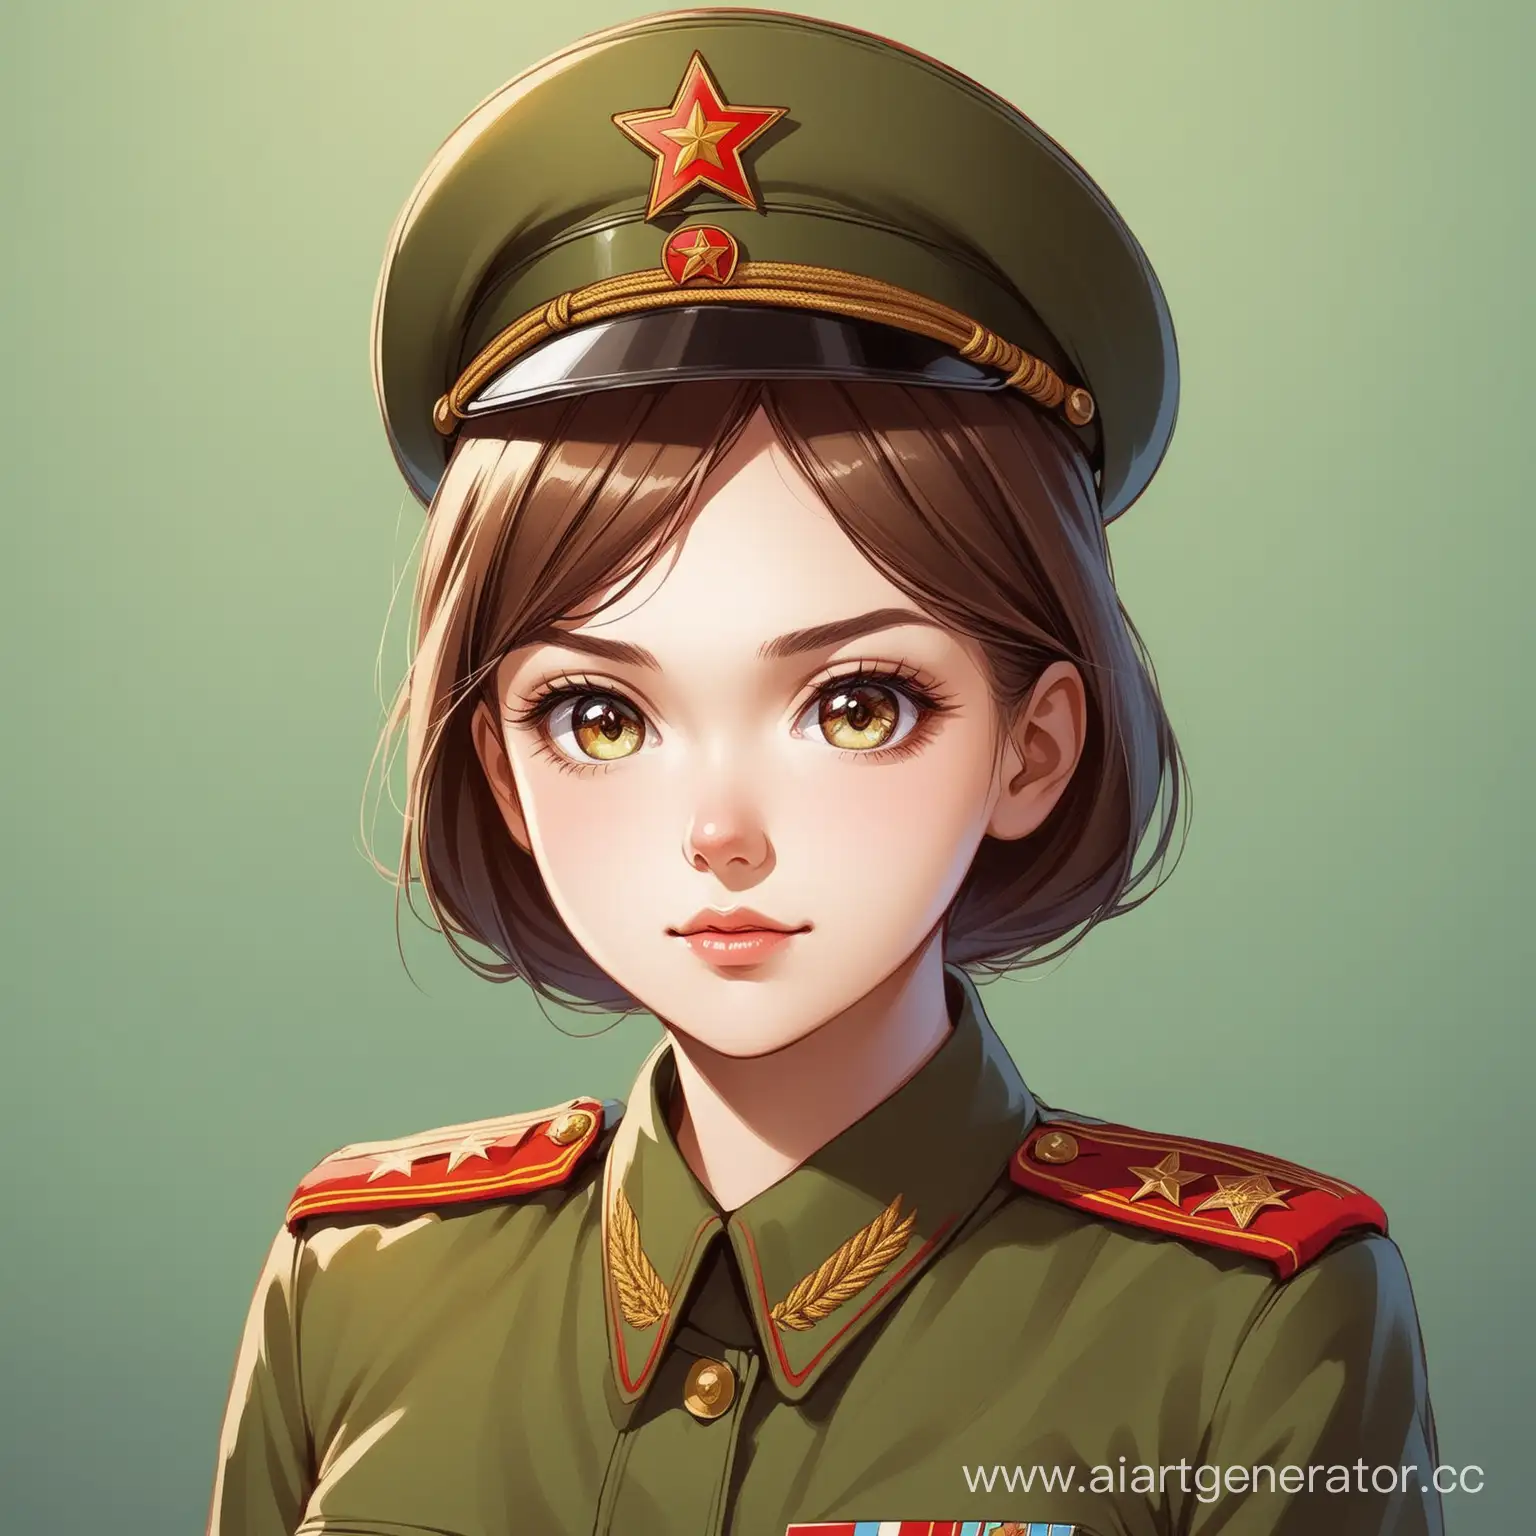 Soviet-Era-Girl-in-Military-Uniform-Saluting